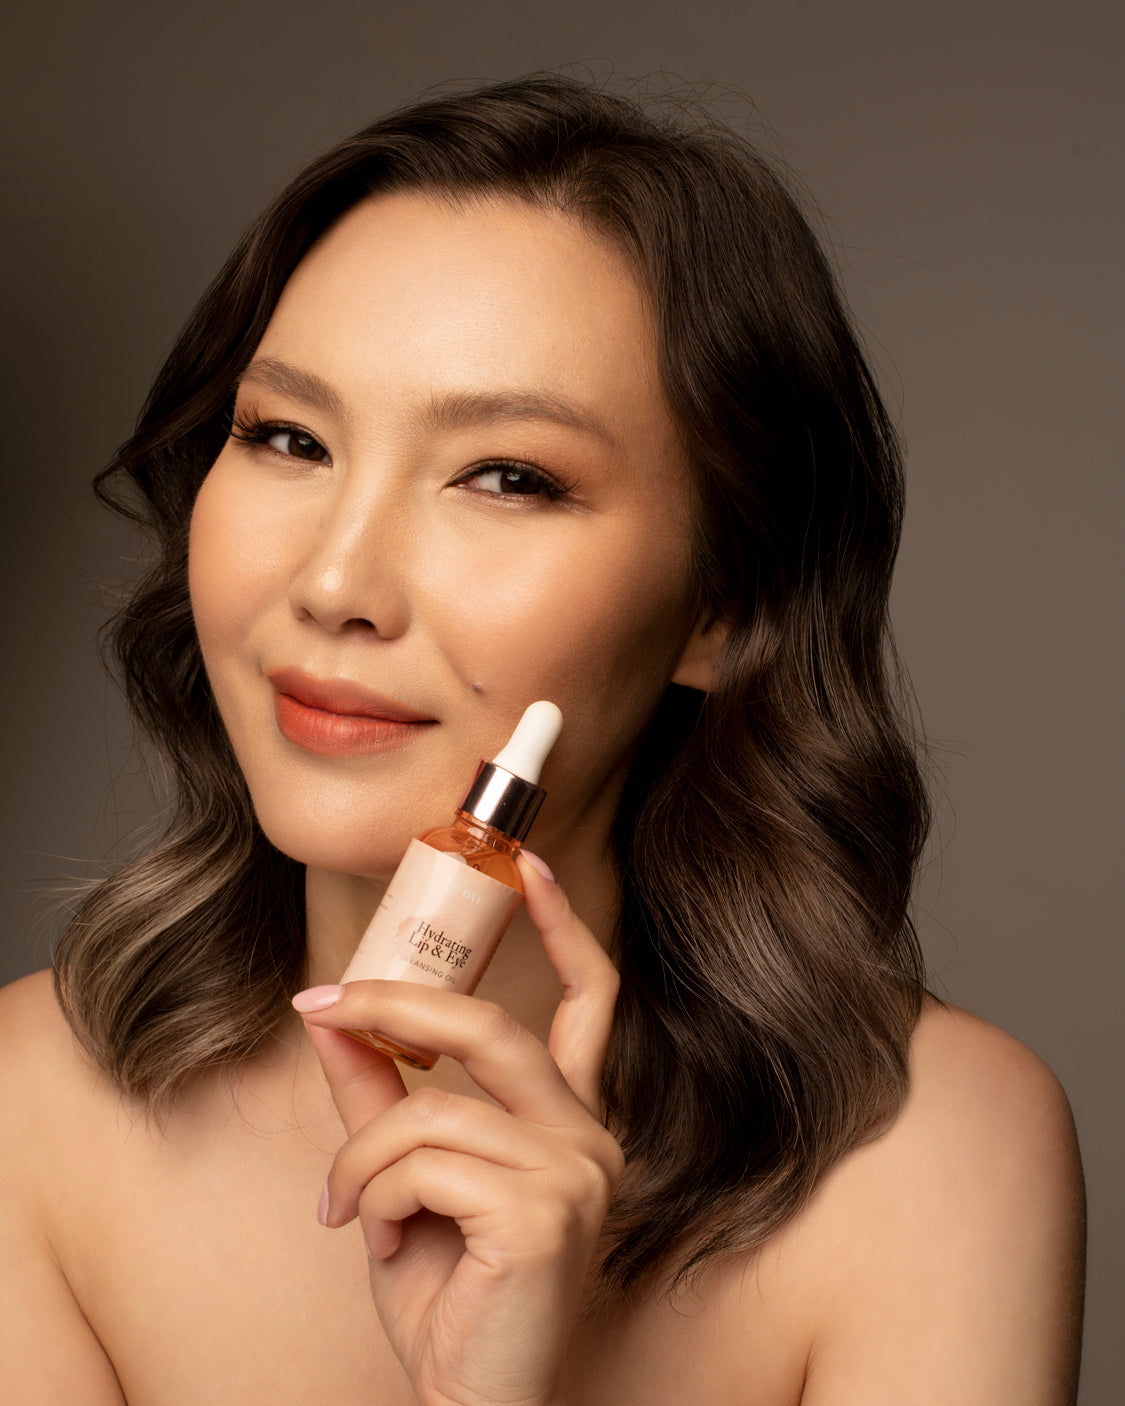 Hydrating Lip & Eye Make-Up Cleansing Oil Oyu Cosmetics